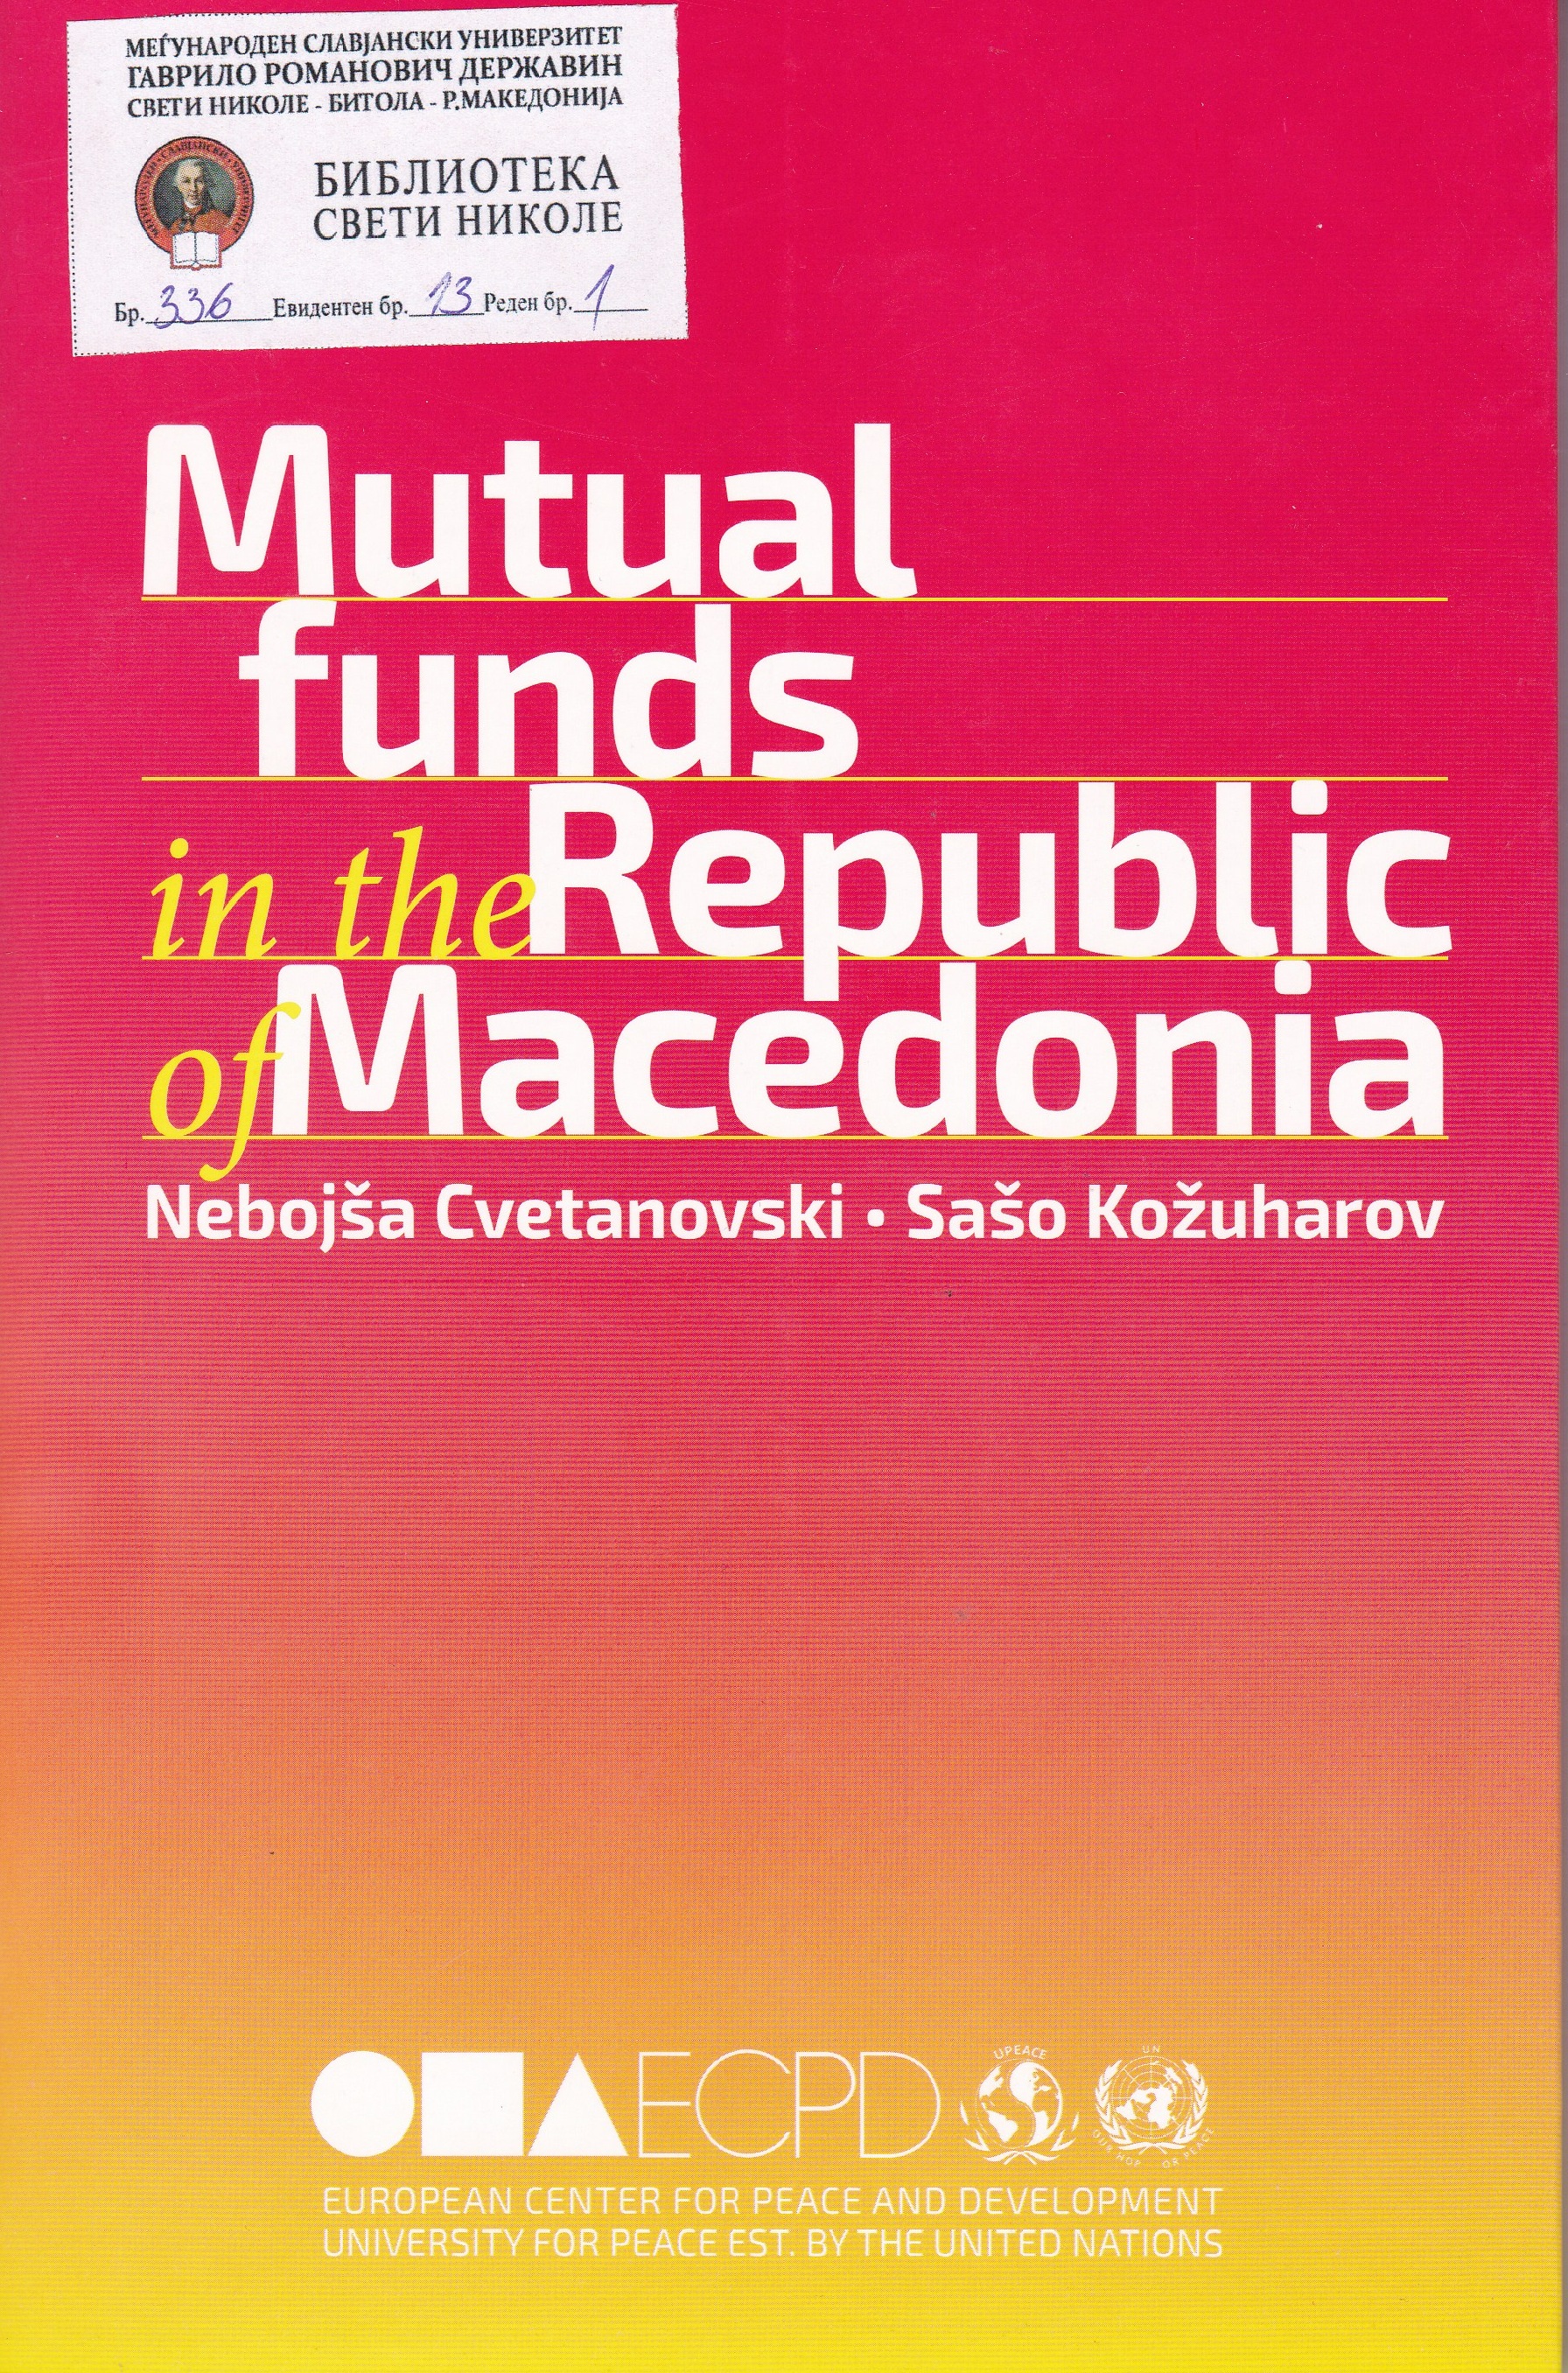 Mutual funds in the Republic of Macedonia